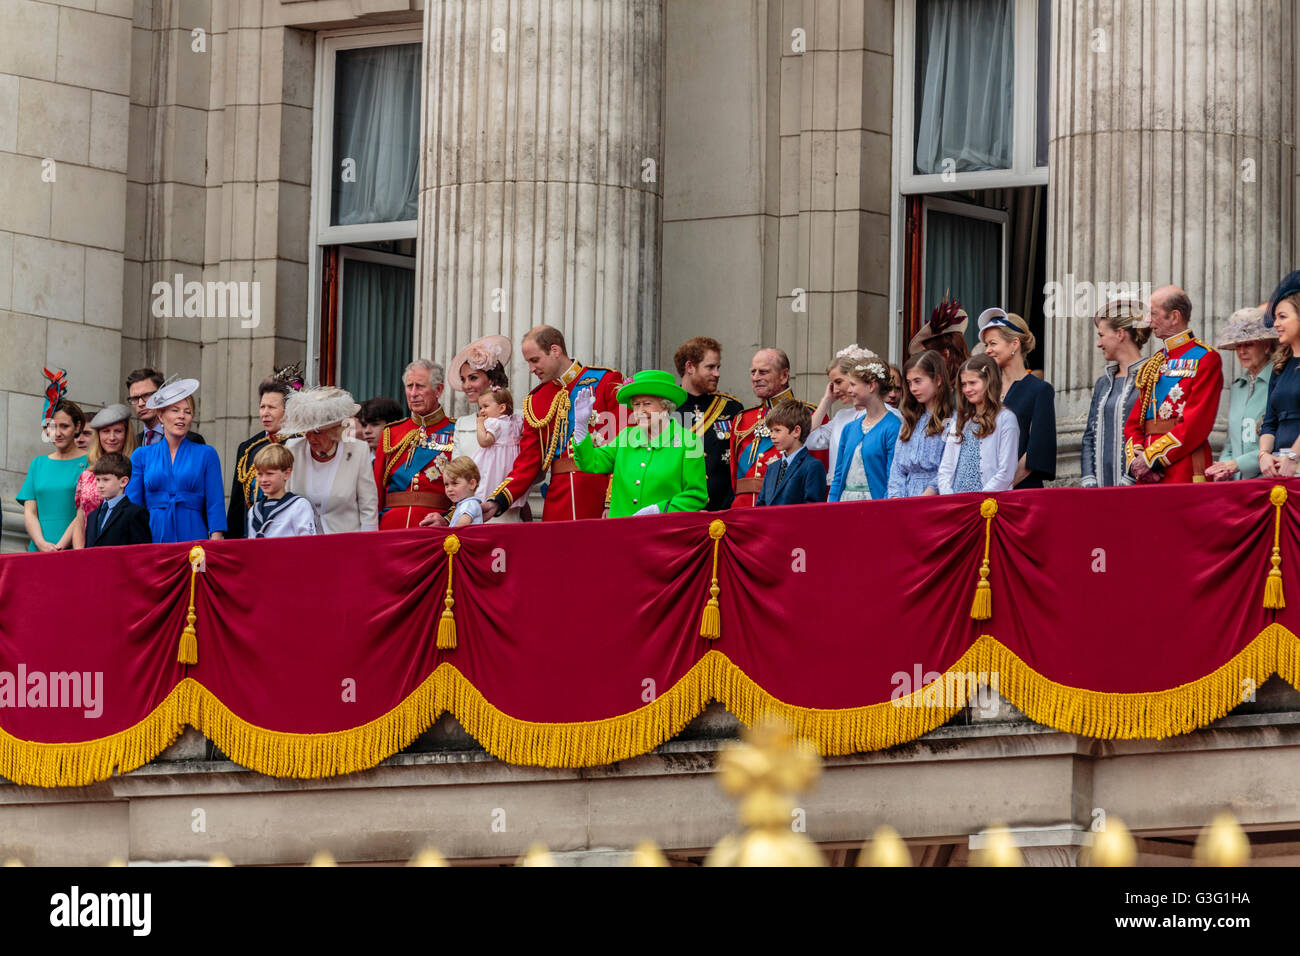 The Royal Family Celebrating the Queens Birthday on the balcony of Buckingham Palace London England UK 2016 Stock Photo